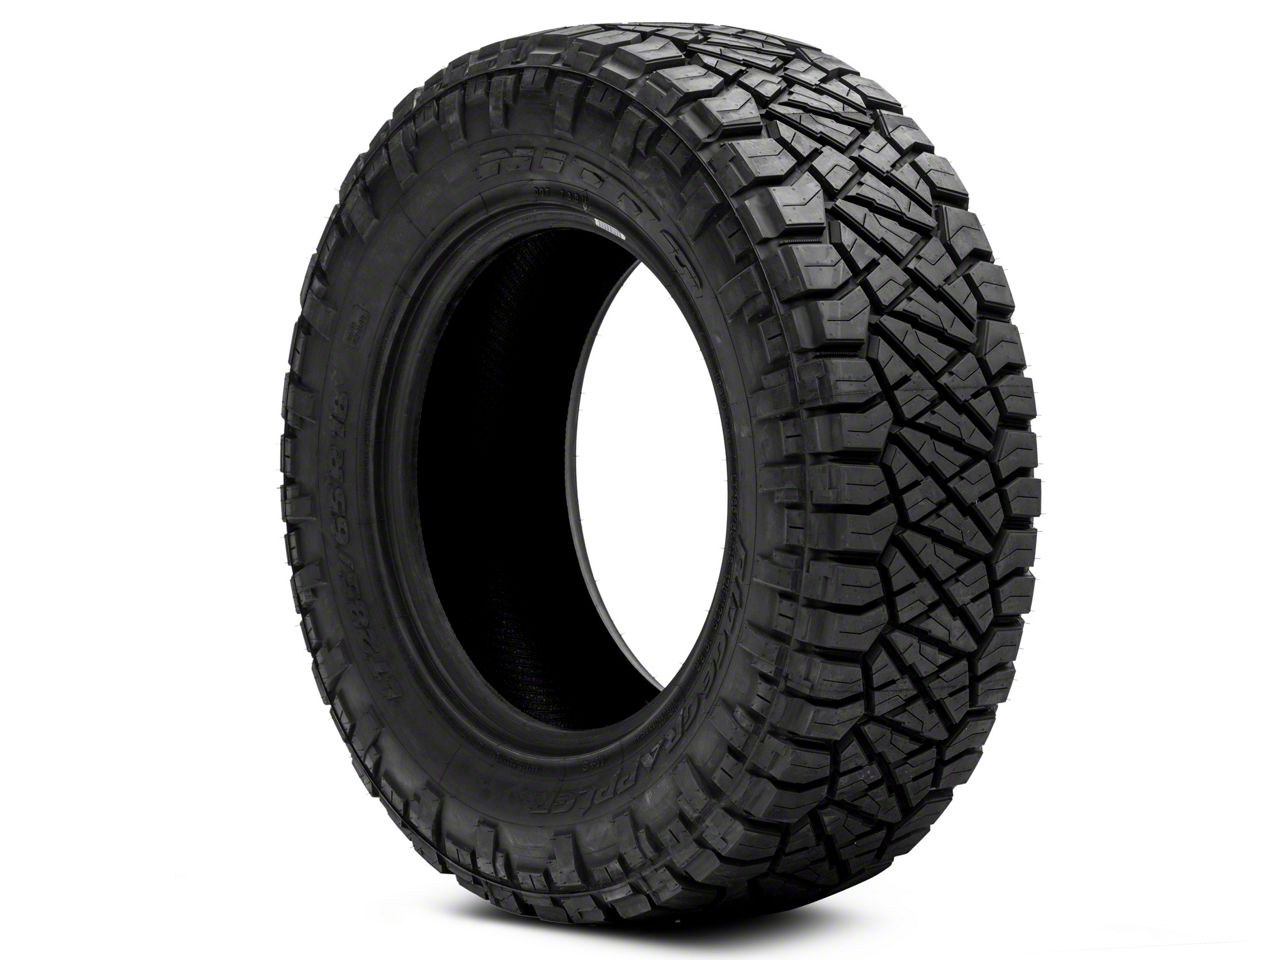 NITTO Ridge Grappler All-Terrain Tire (33